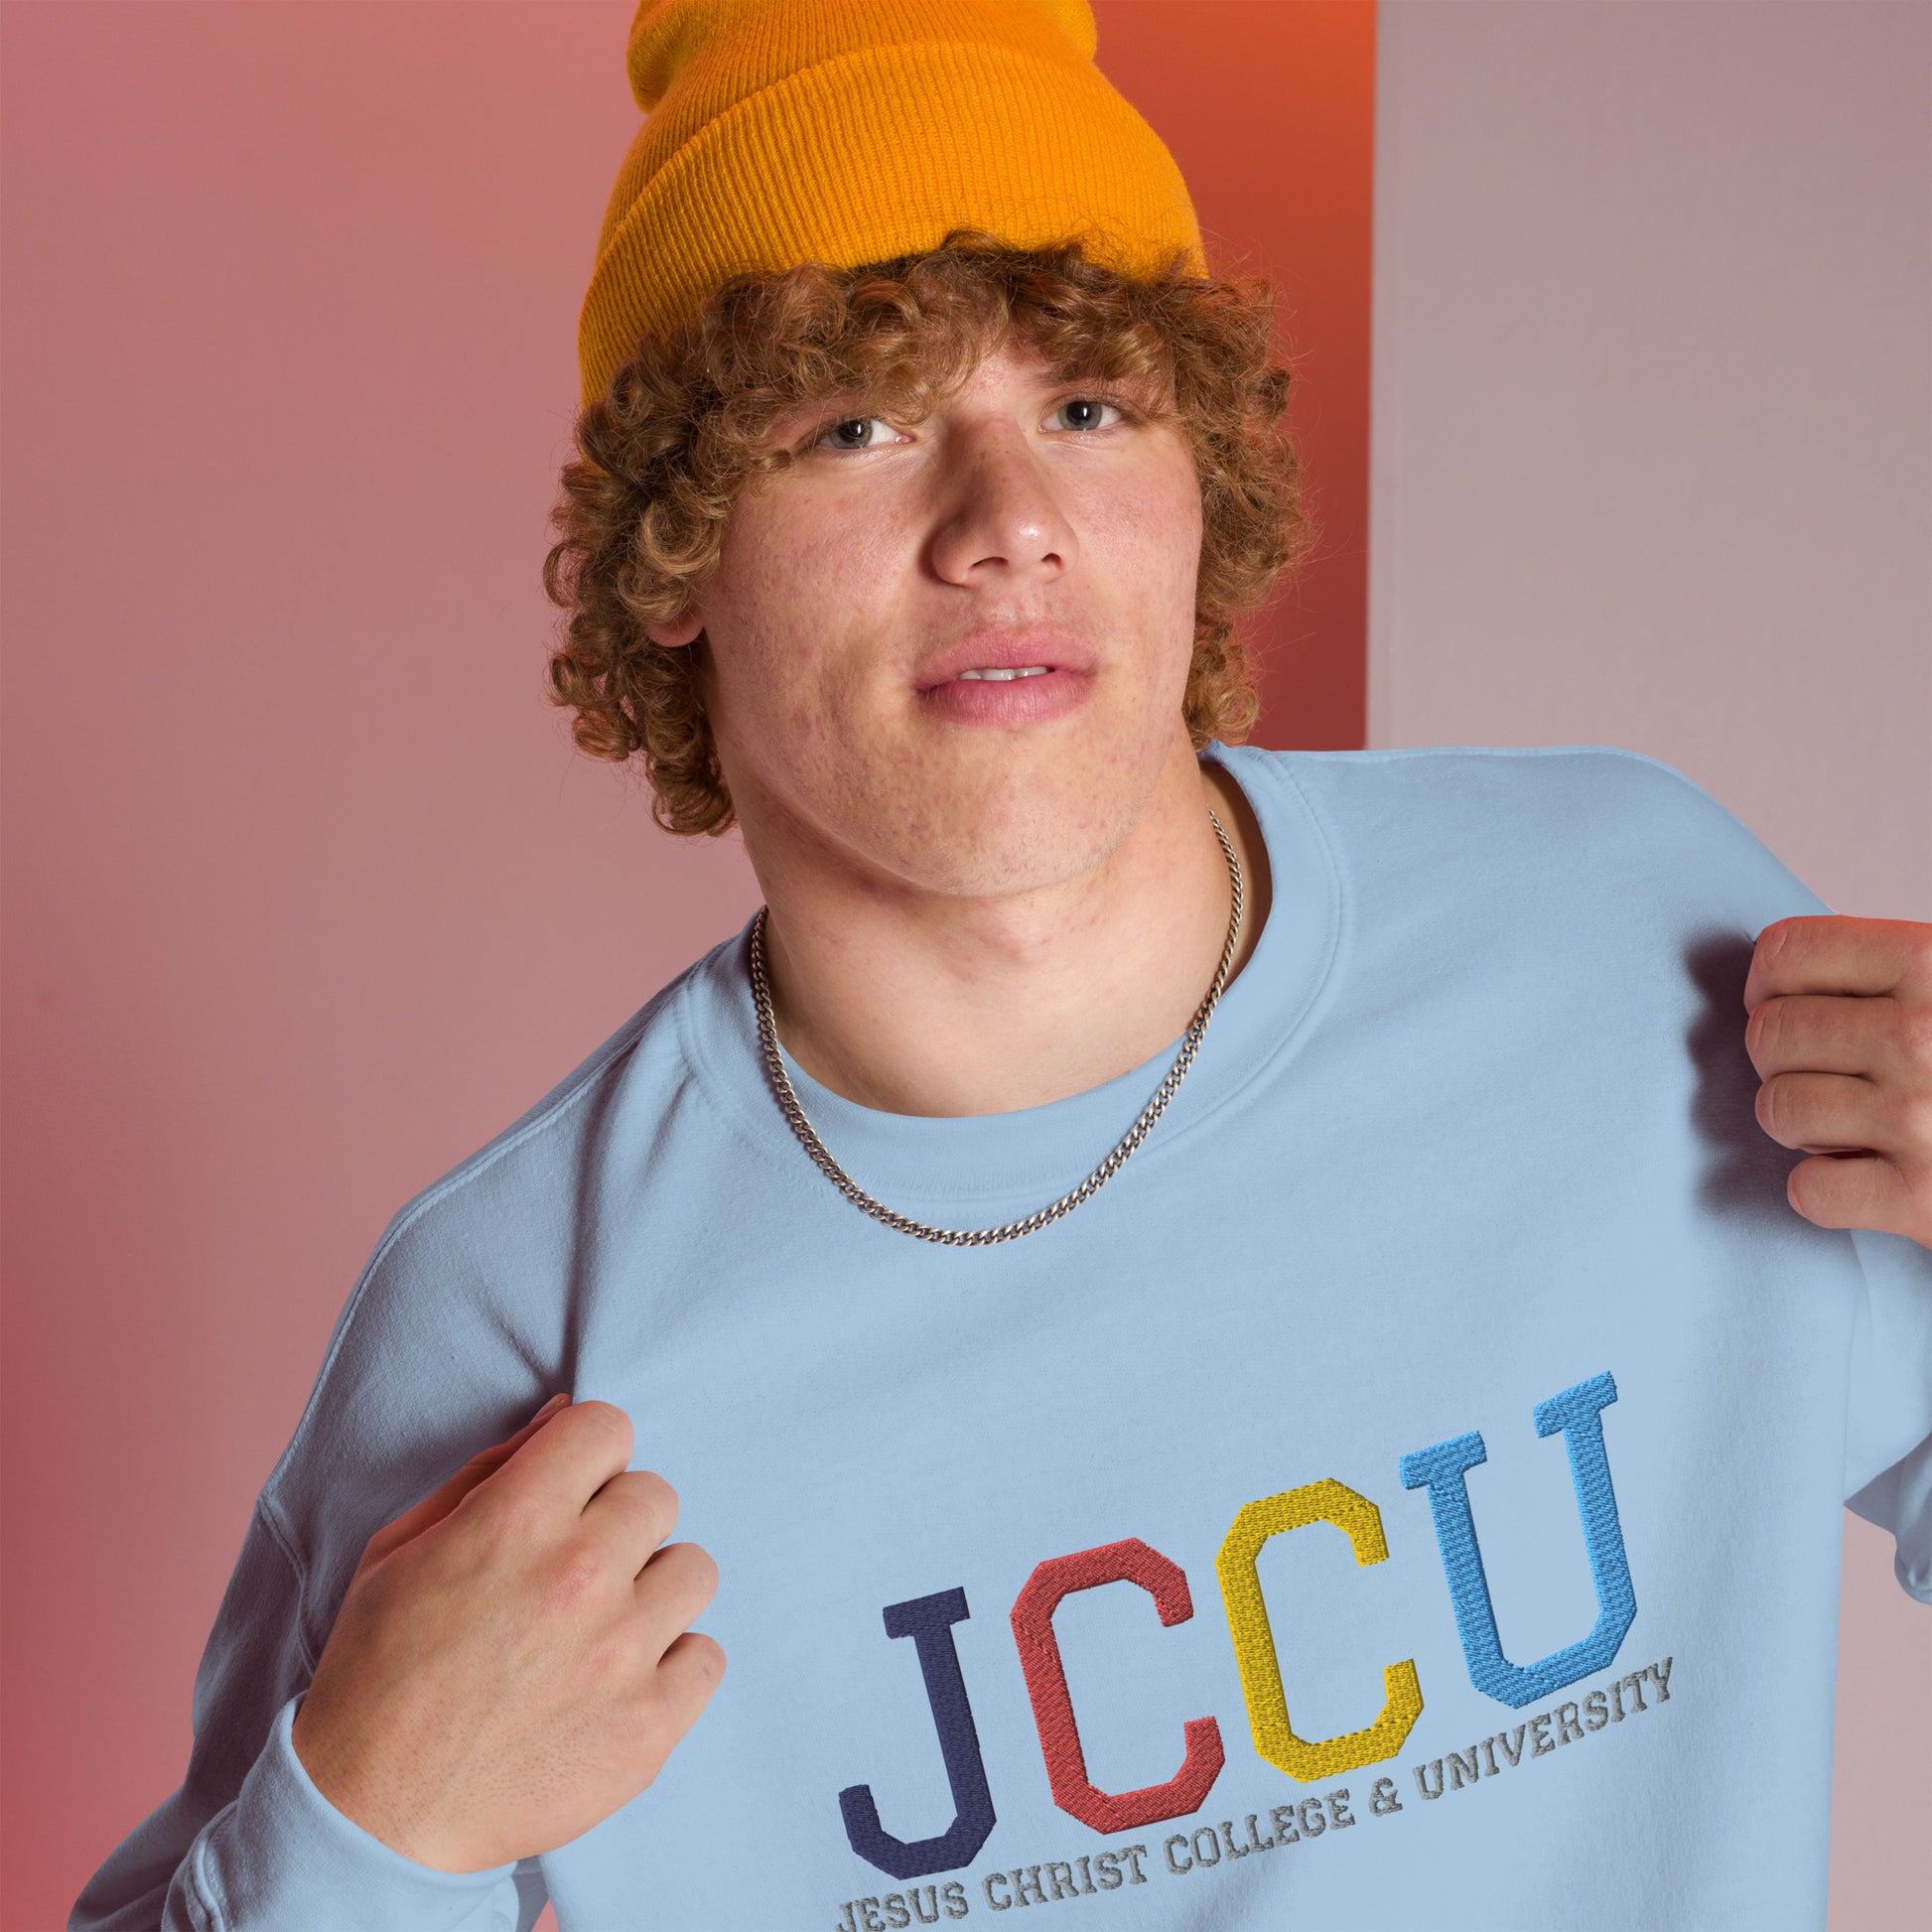 JCCU Embroidered Unisex Sweatshirt - Shirts & Tops